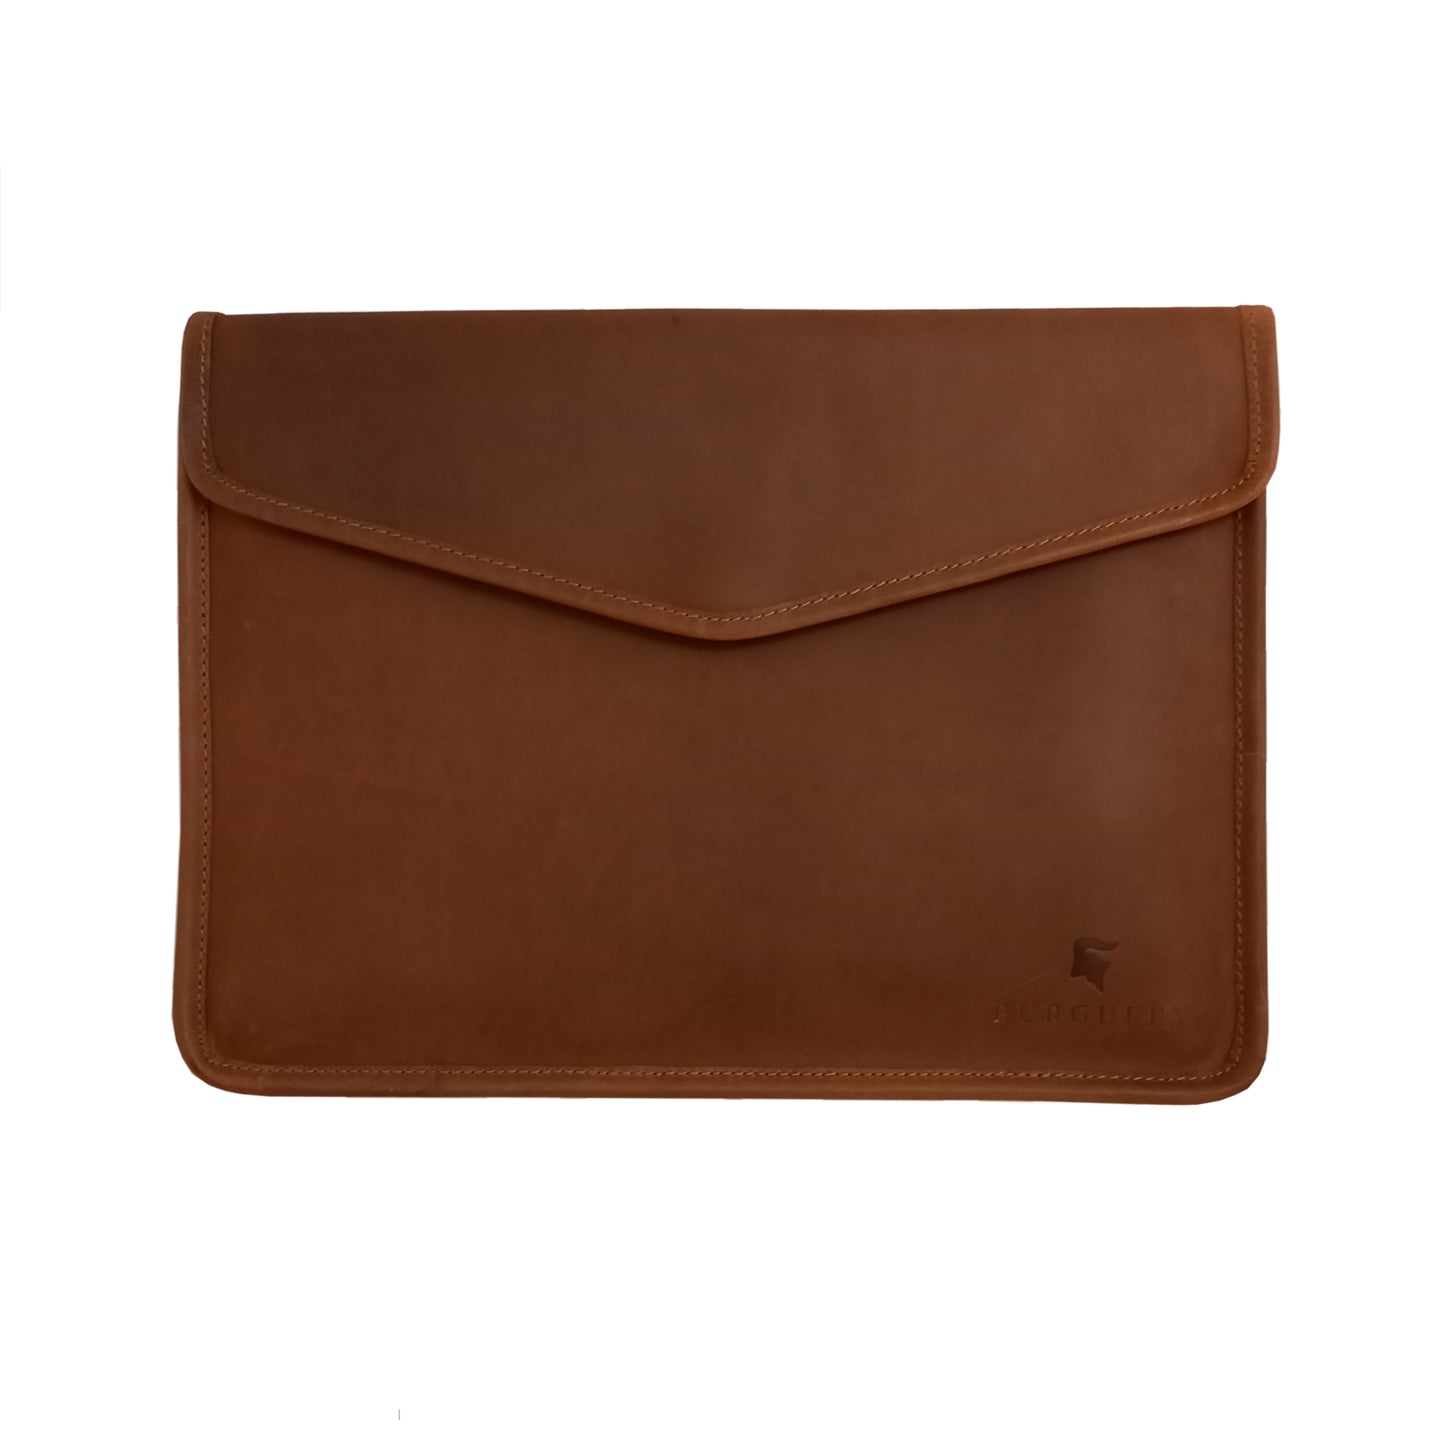 Hoxton - Luxury Leather Laptop Sleeve / Document Wallet